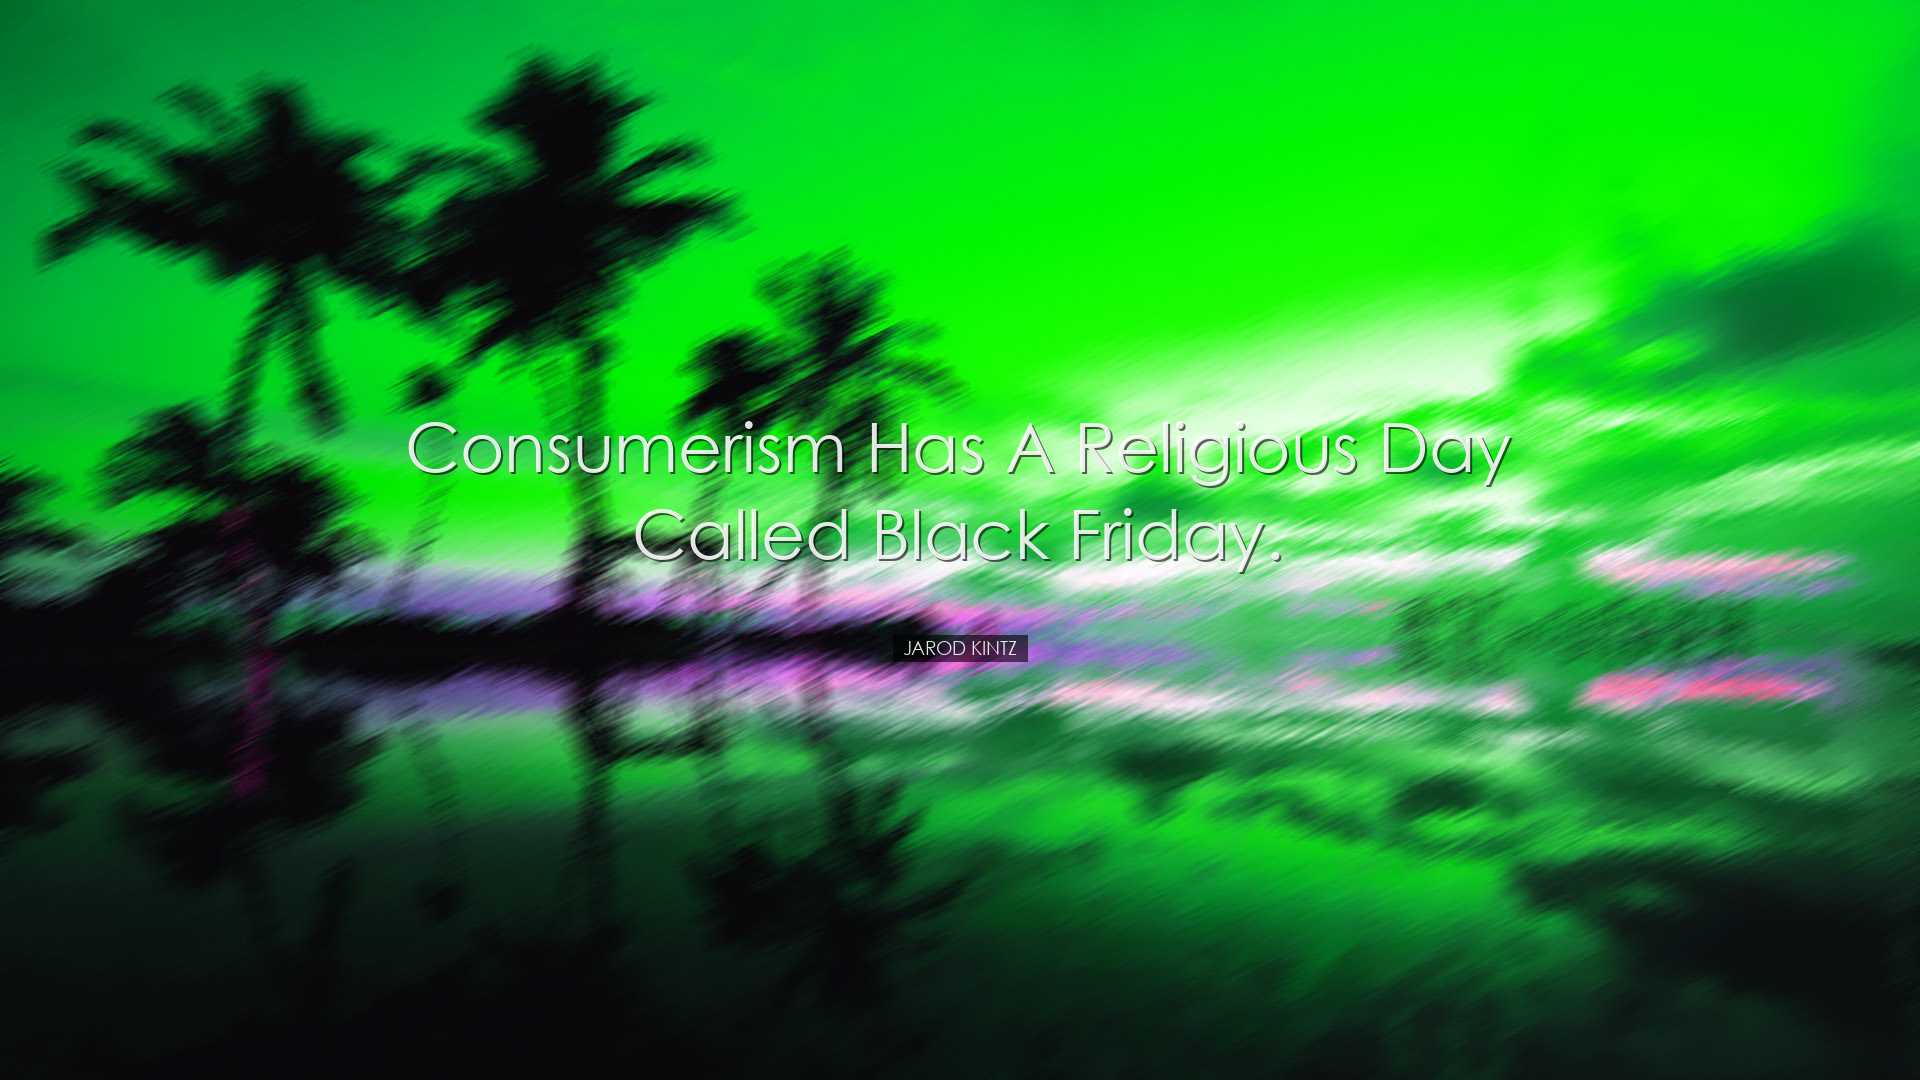 Consumerism has a religious day called Black Friday. - Jarod Kintz